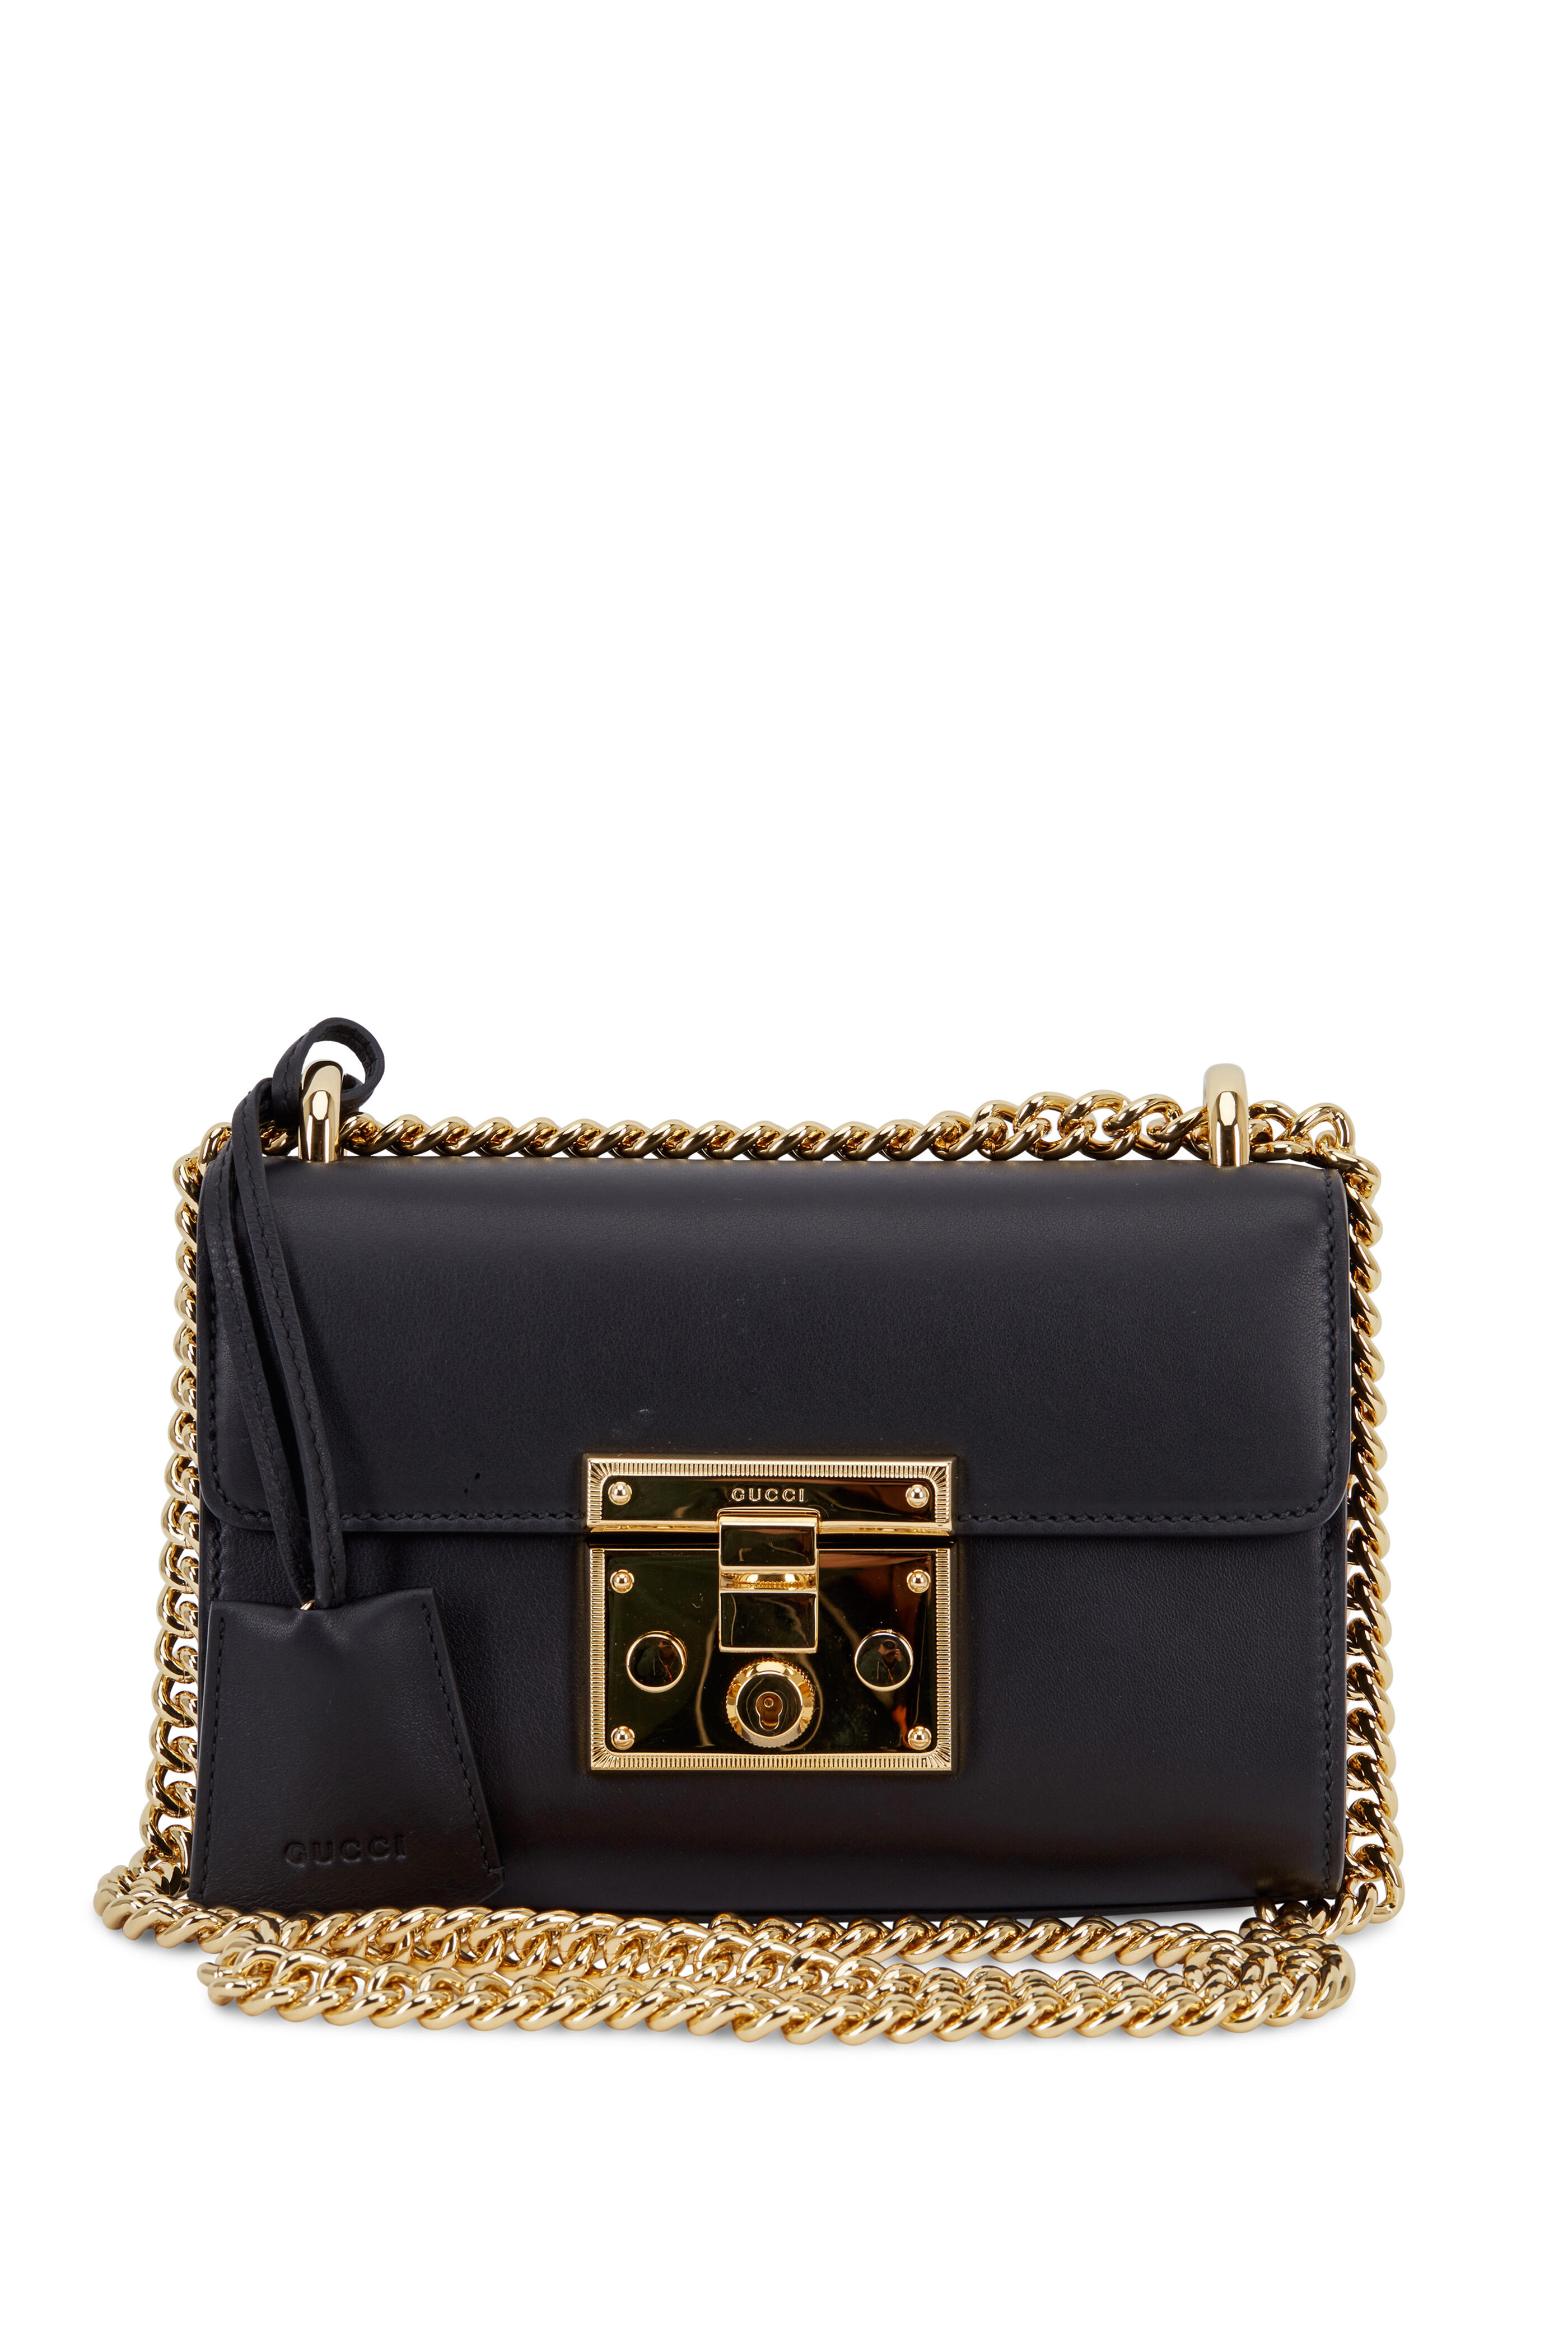 Gucci Padlock Small GG Supreme Canvas Shoulder Handbag